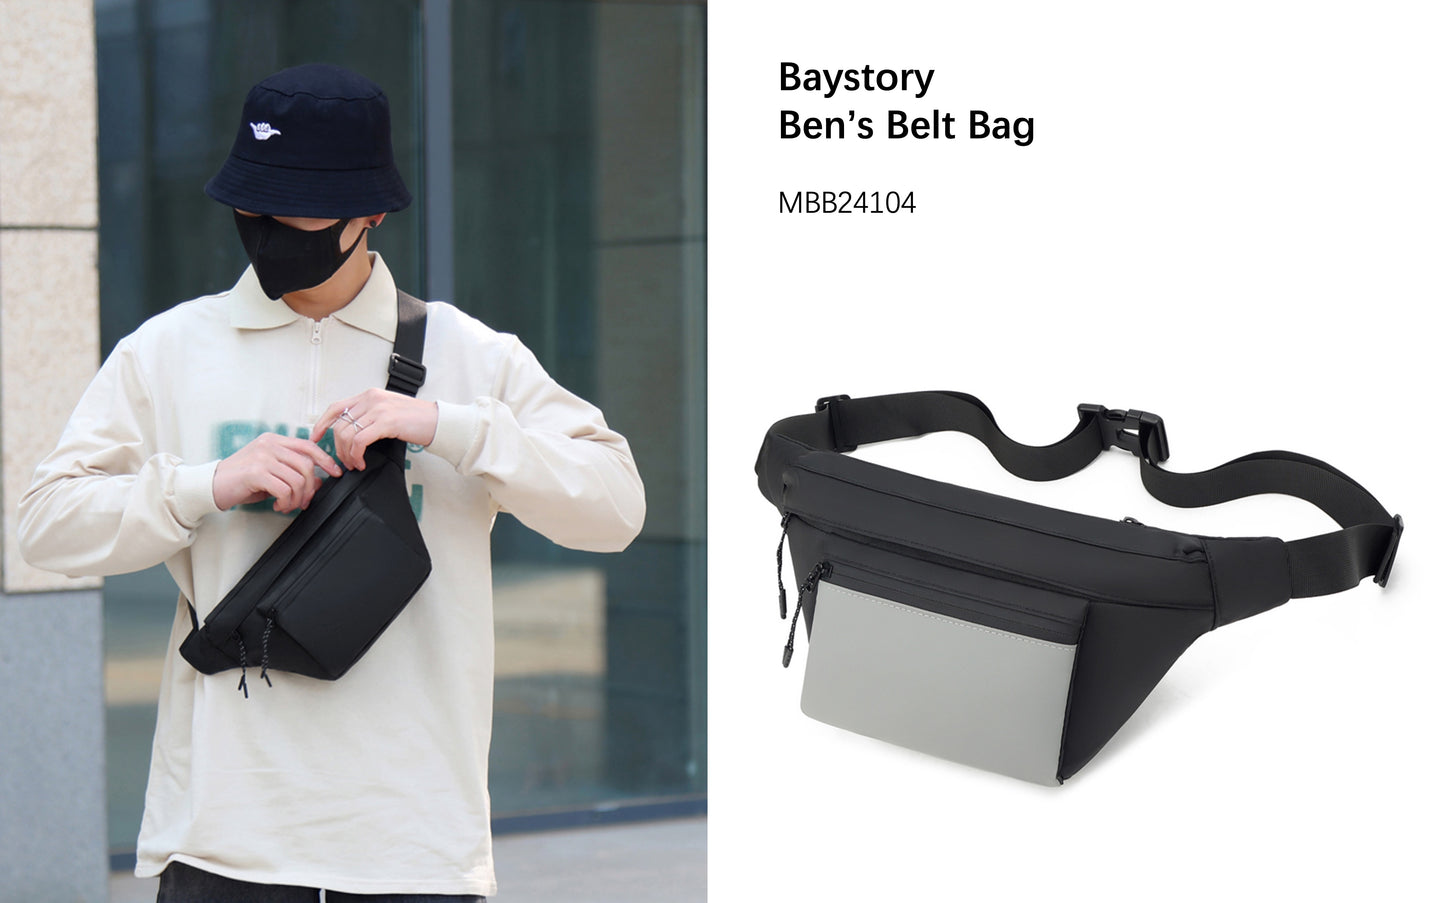 Baystory Men's Belt bag MBB24104 - Baystory